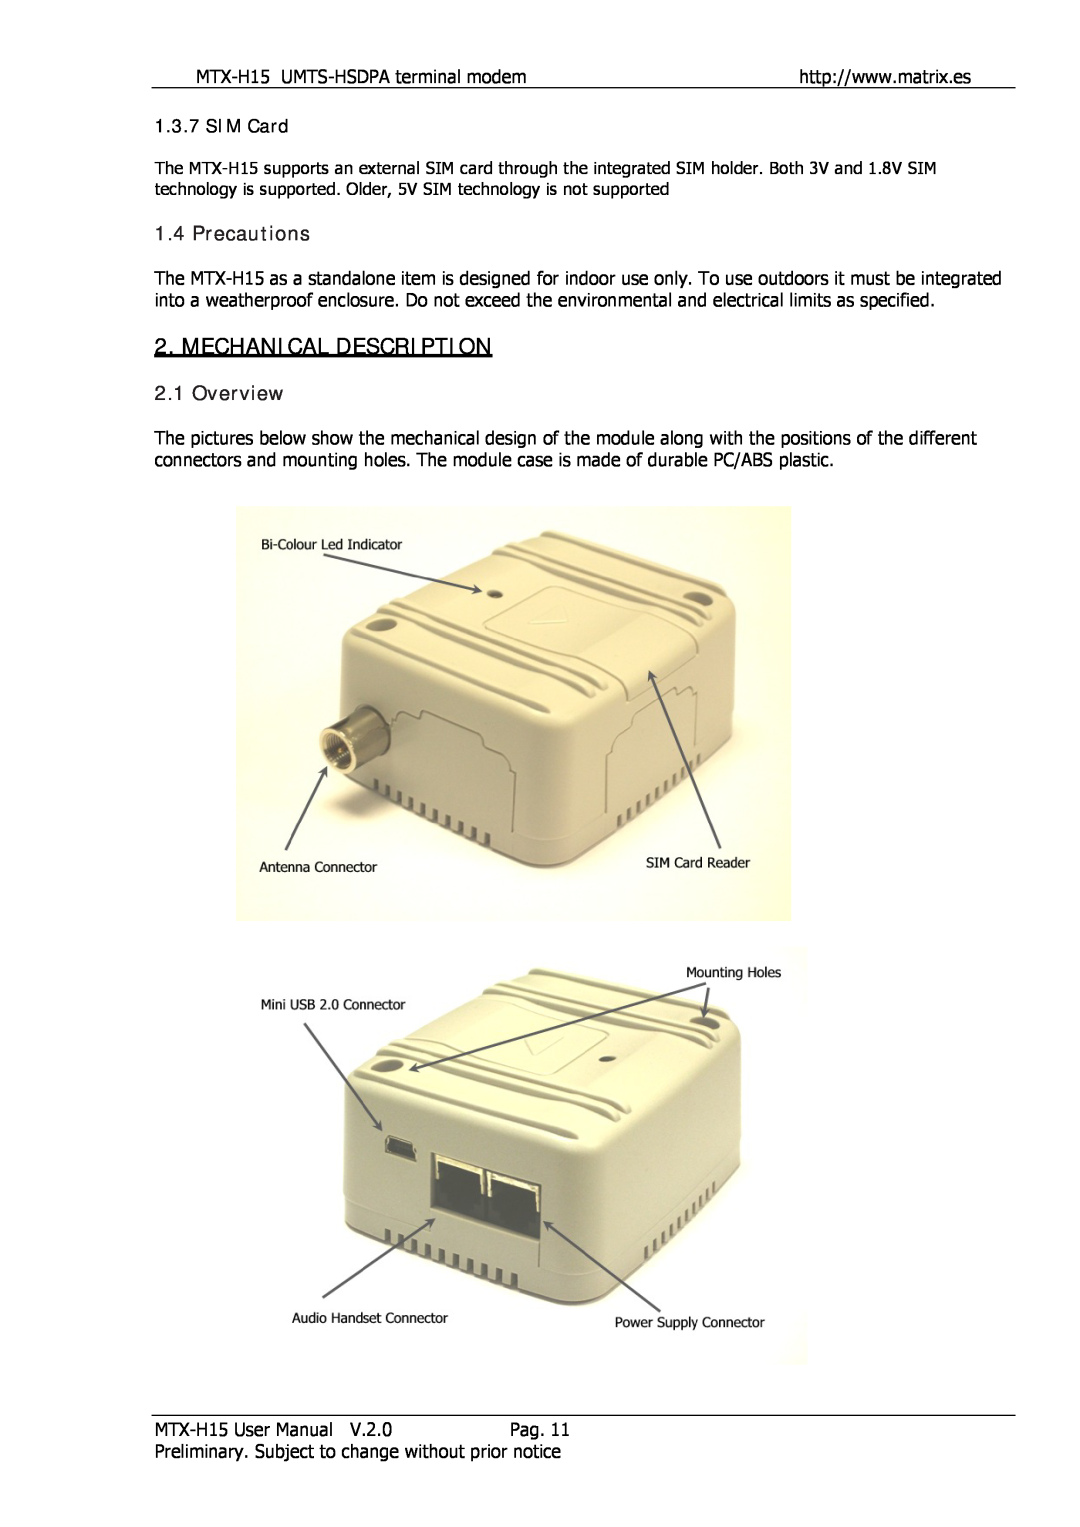 Siemens MTX-H15 user manual Mechanical Description, Precautions, Overview, SIM Card 